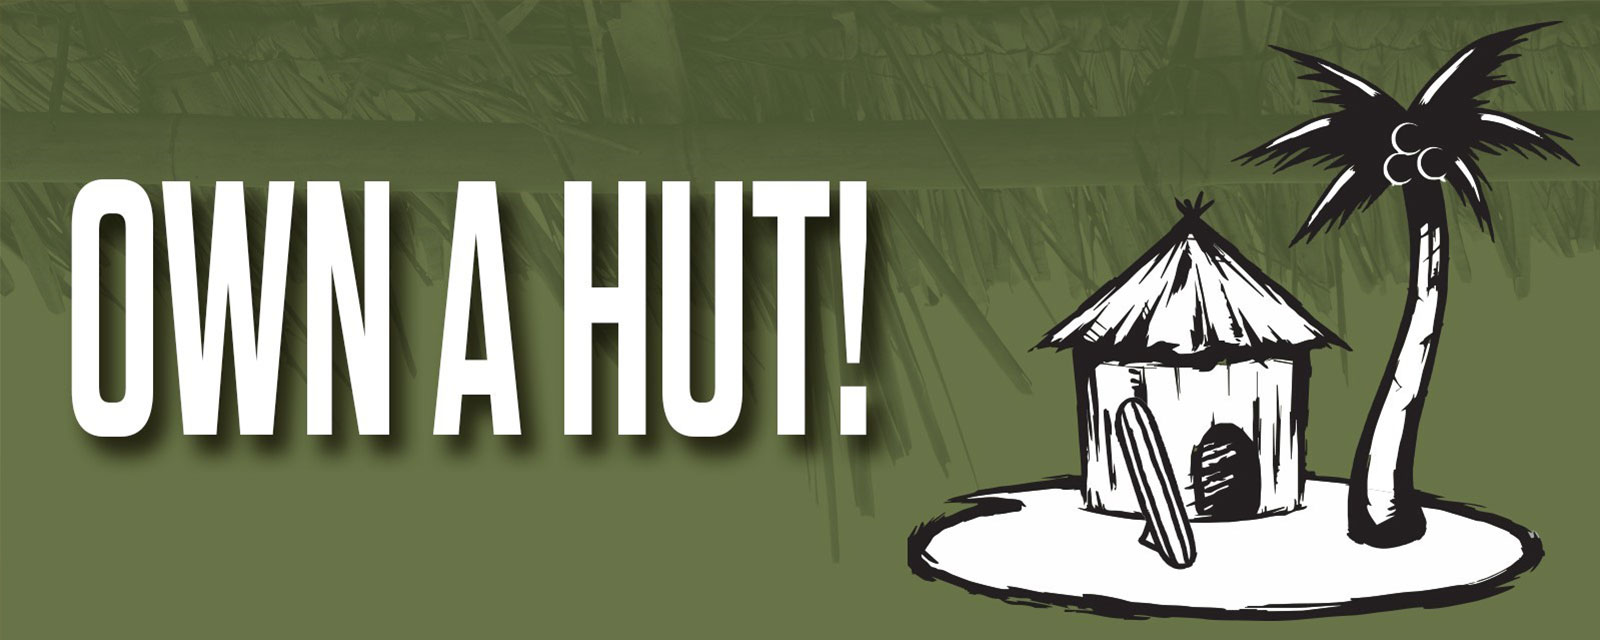 Own a Hut!